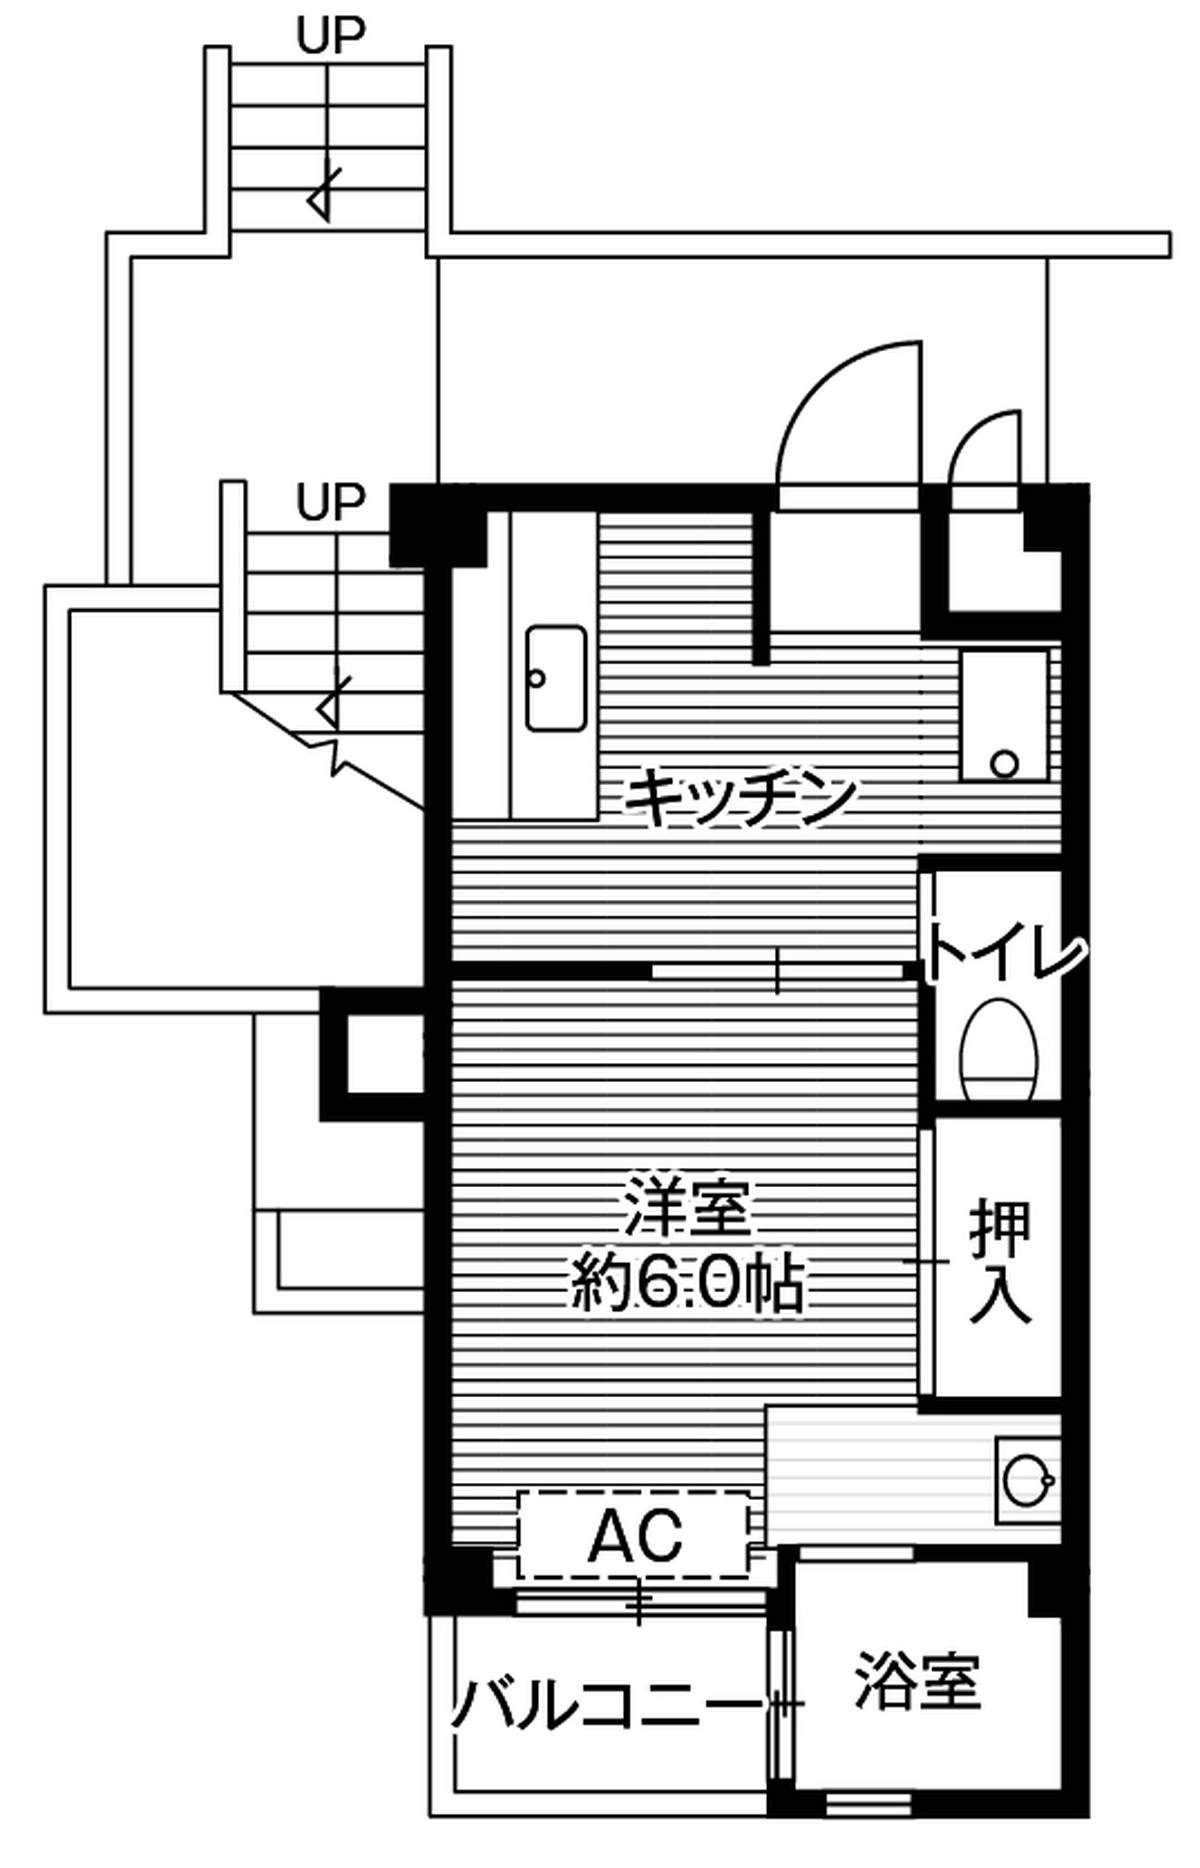 1DK floorplan of Village House Ageo in Ageo-shi